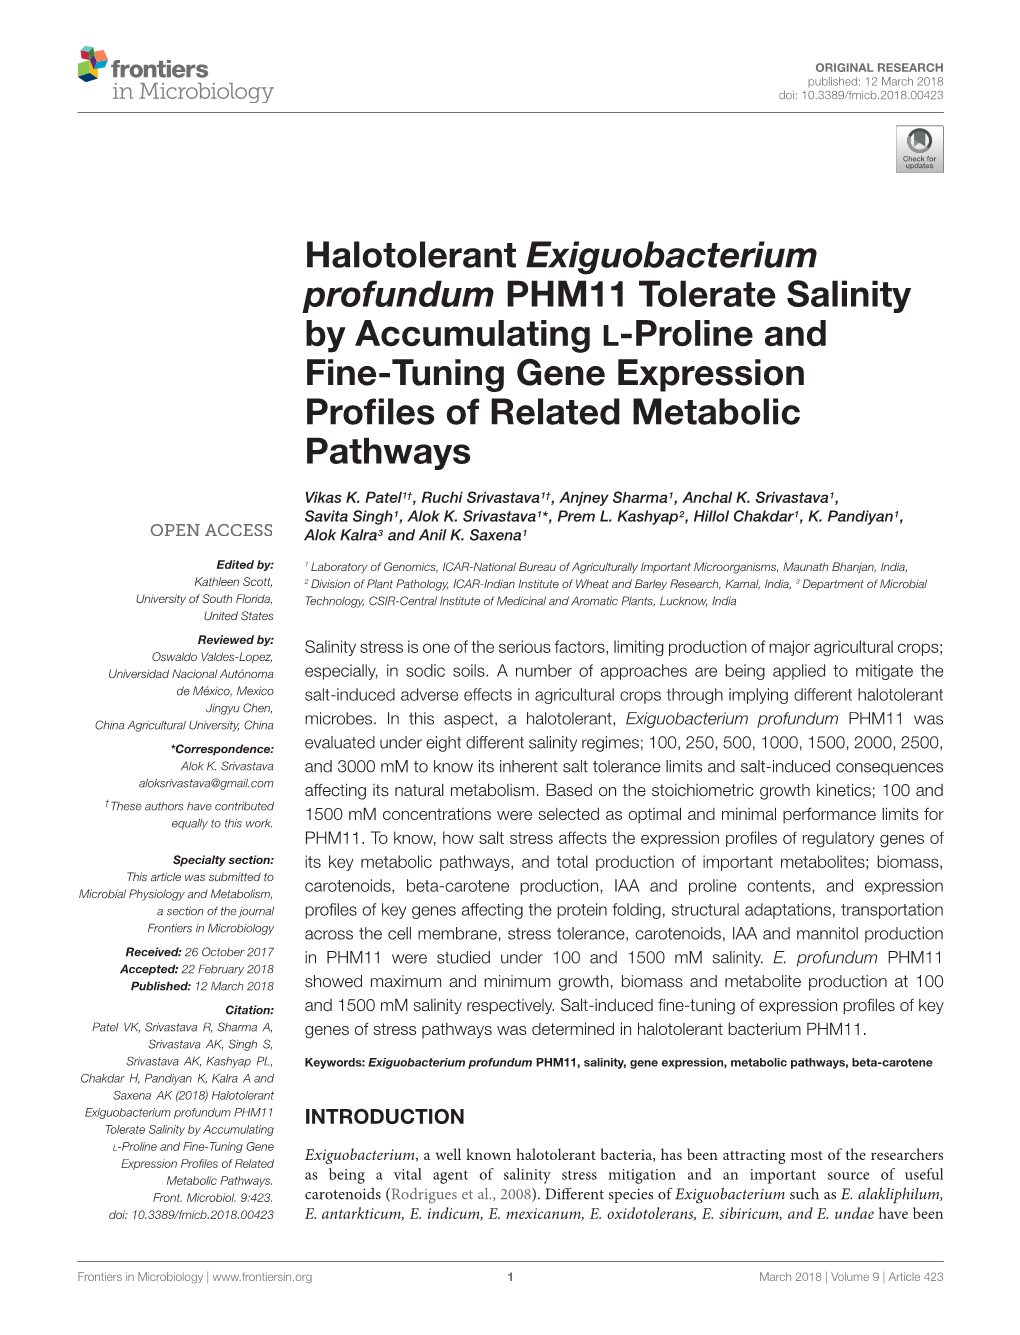 Halotolerant Exiguobacterium Profundum PHM11 Tolerate Salinity by Accumulating L-Proline and Fine-Tuning Gene Expression Profile